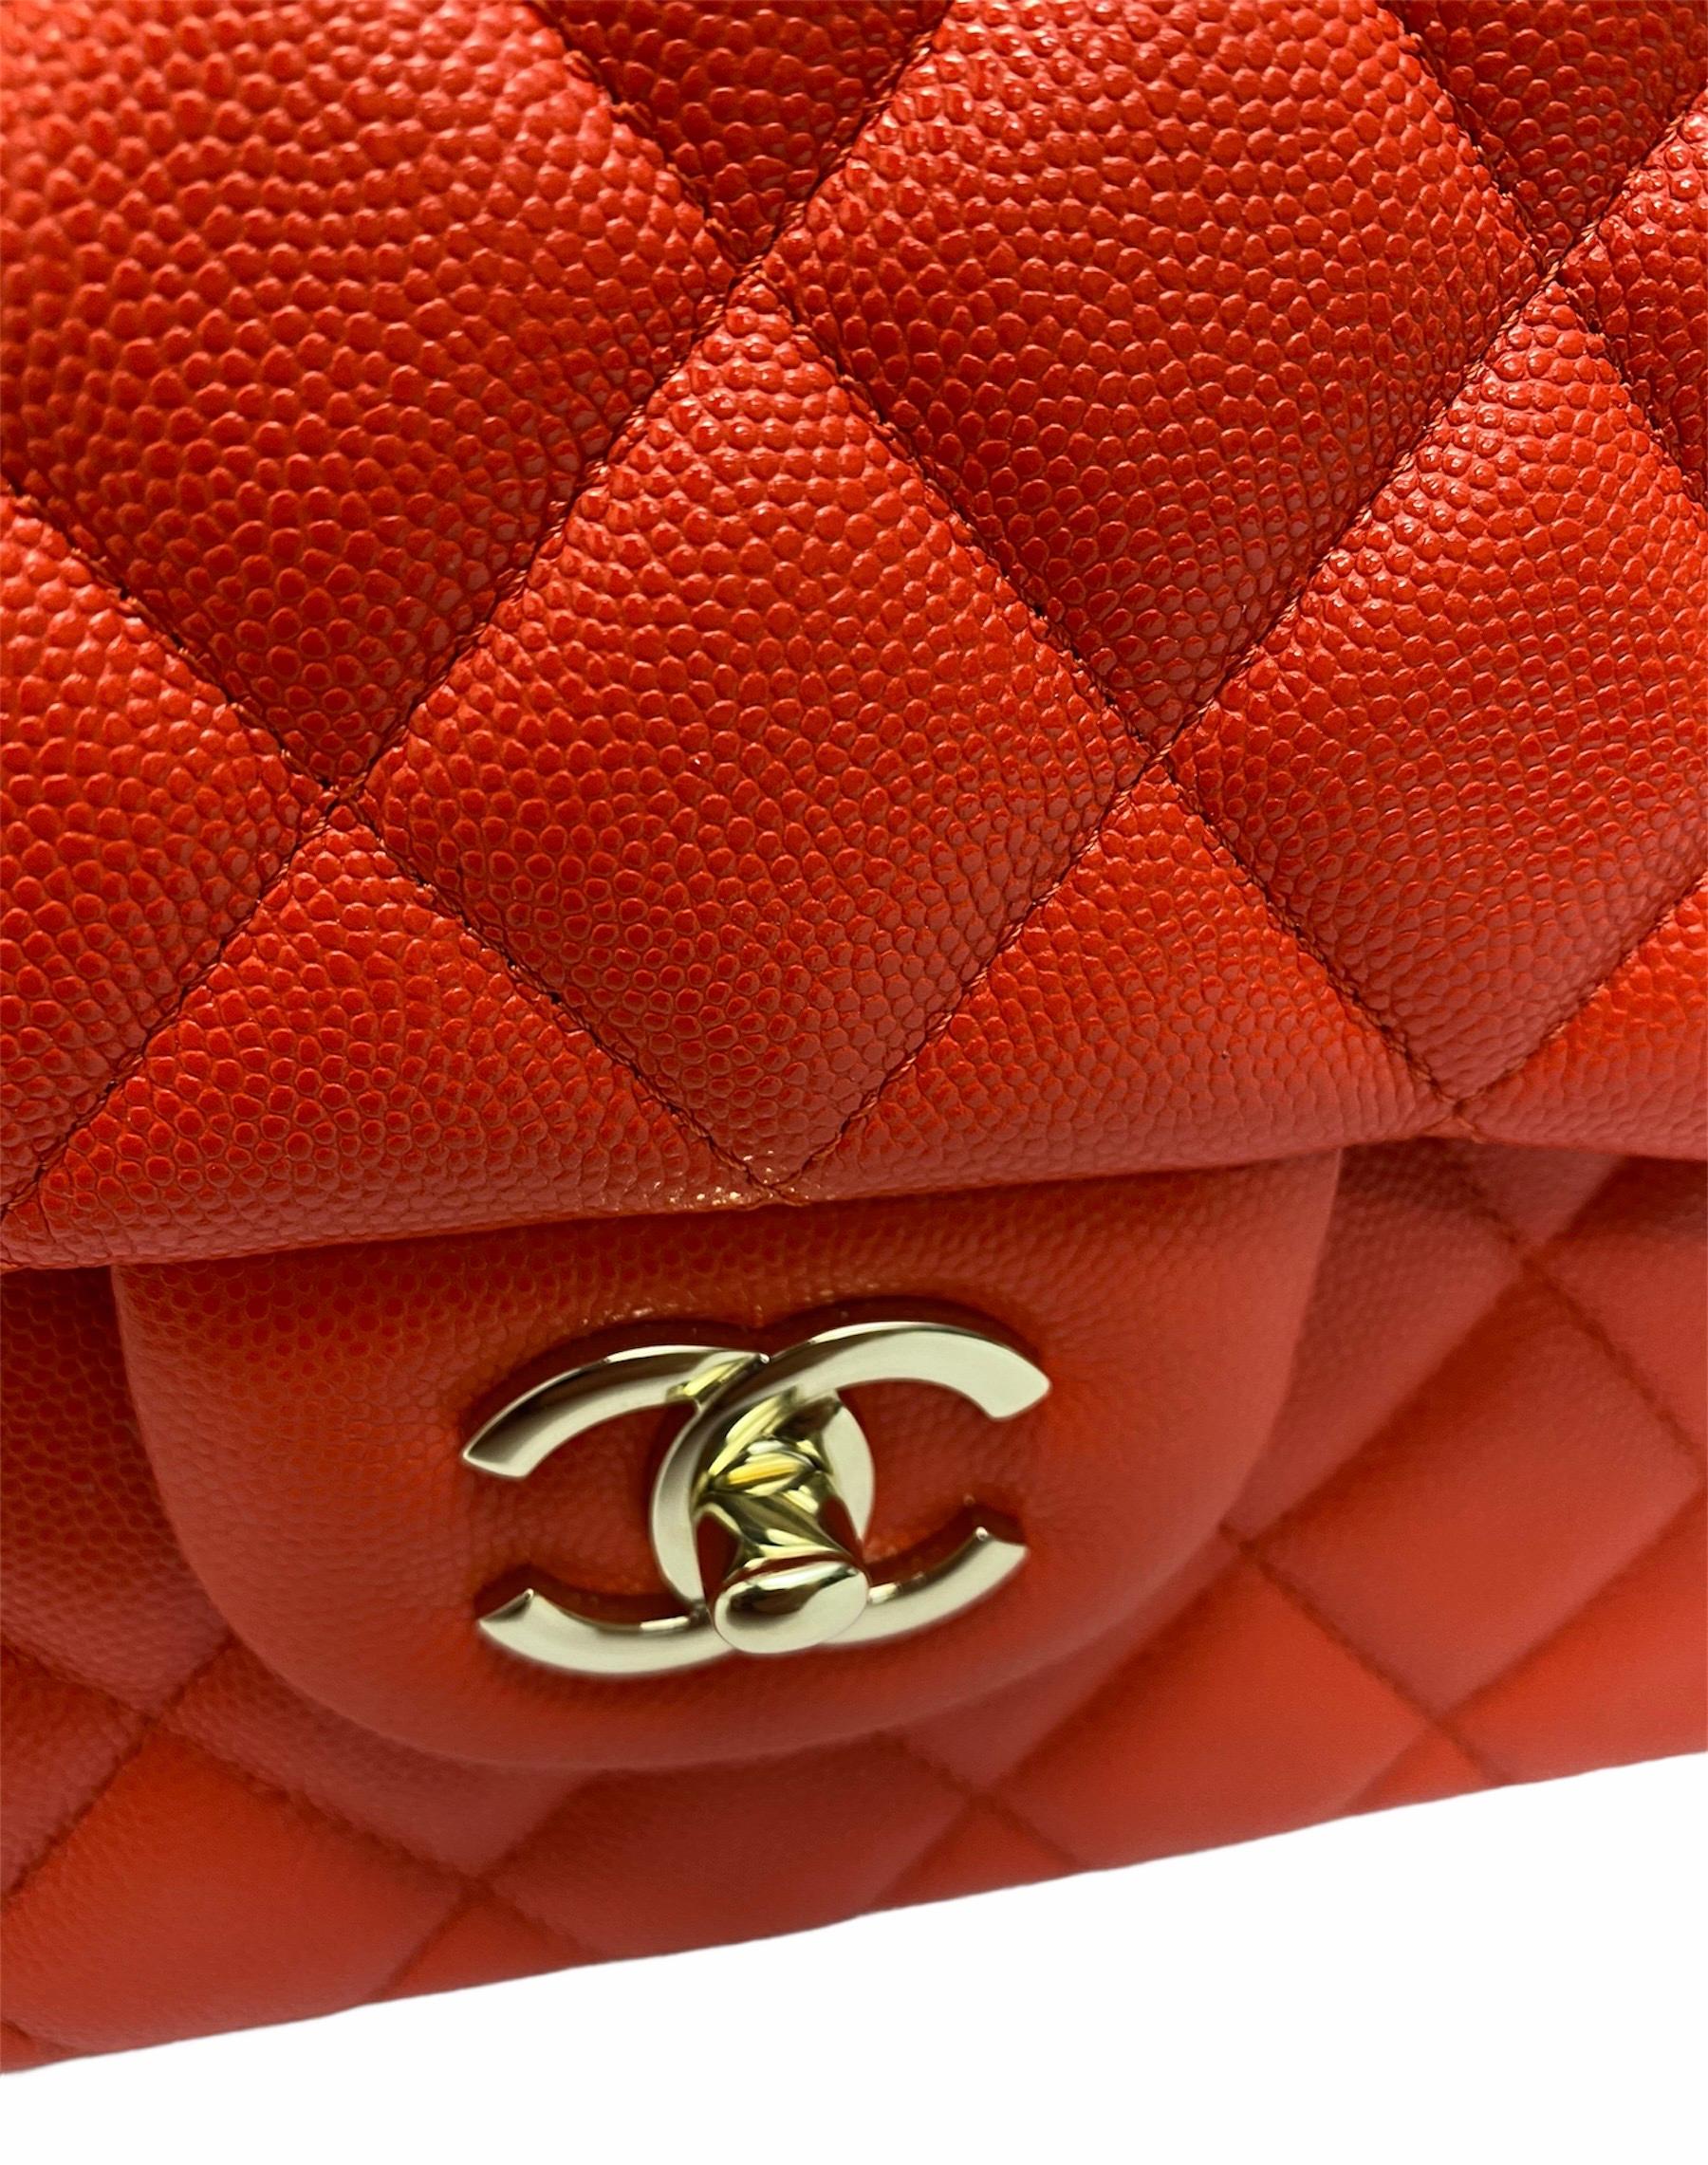 2019 Chanel Red Leather Maxi Jumbo Bag 3